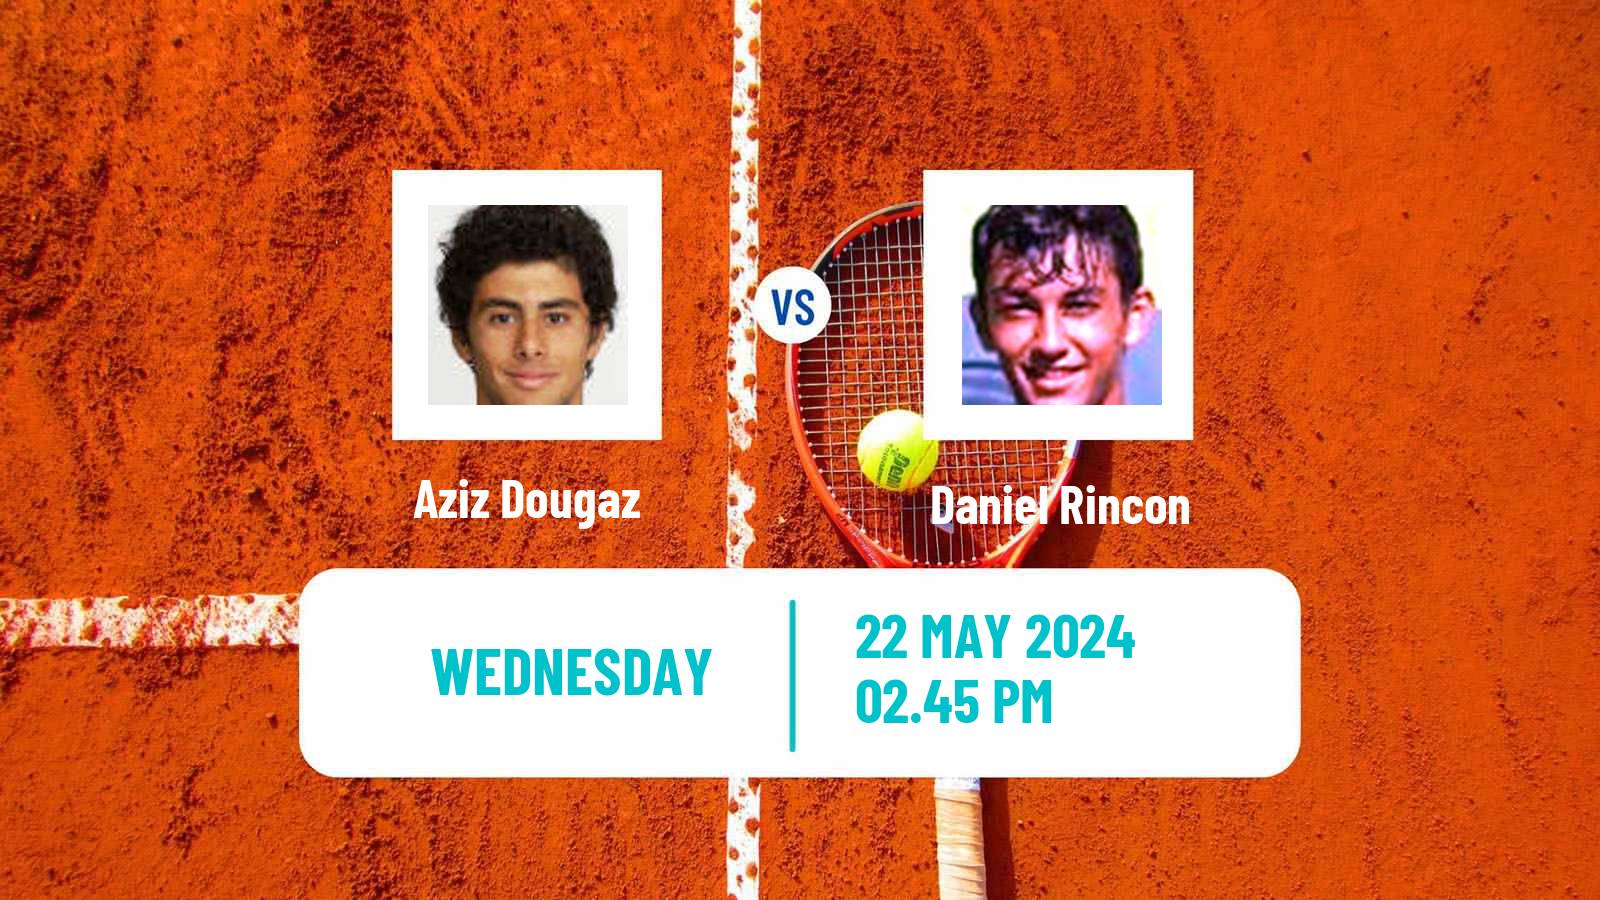 Tennis ATP Roland Garros Aziz Dougaz - Daniel Rincon